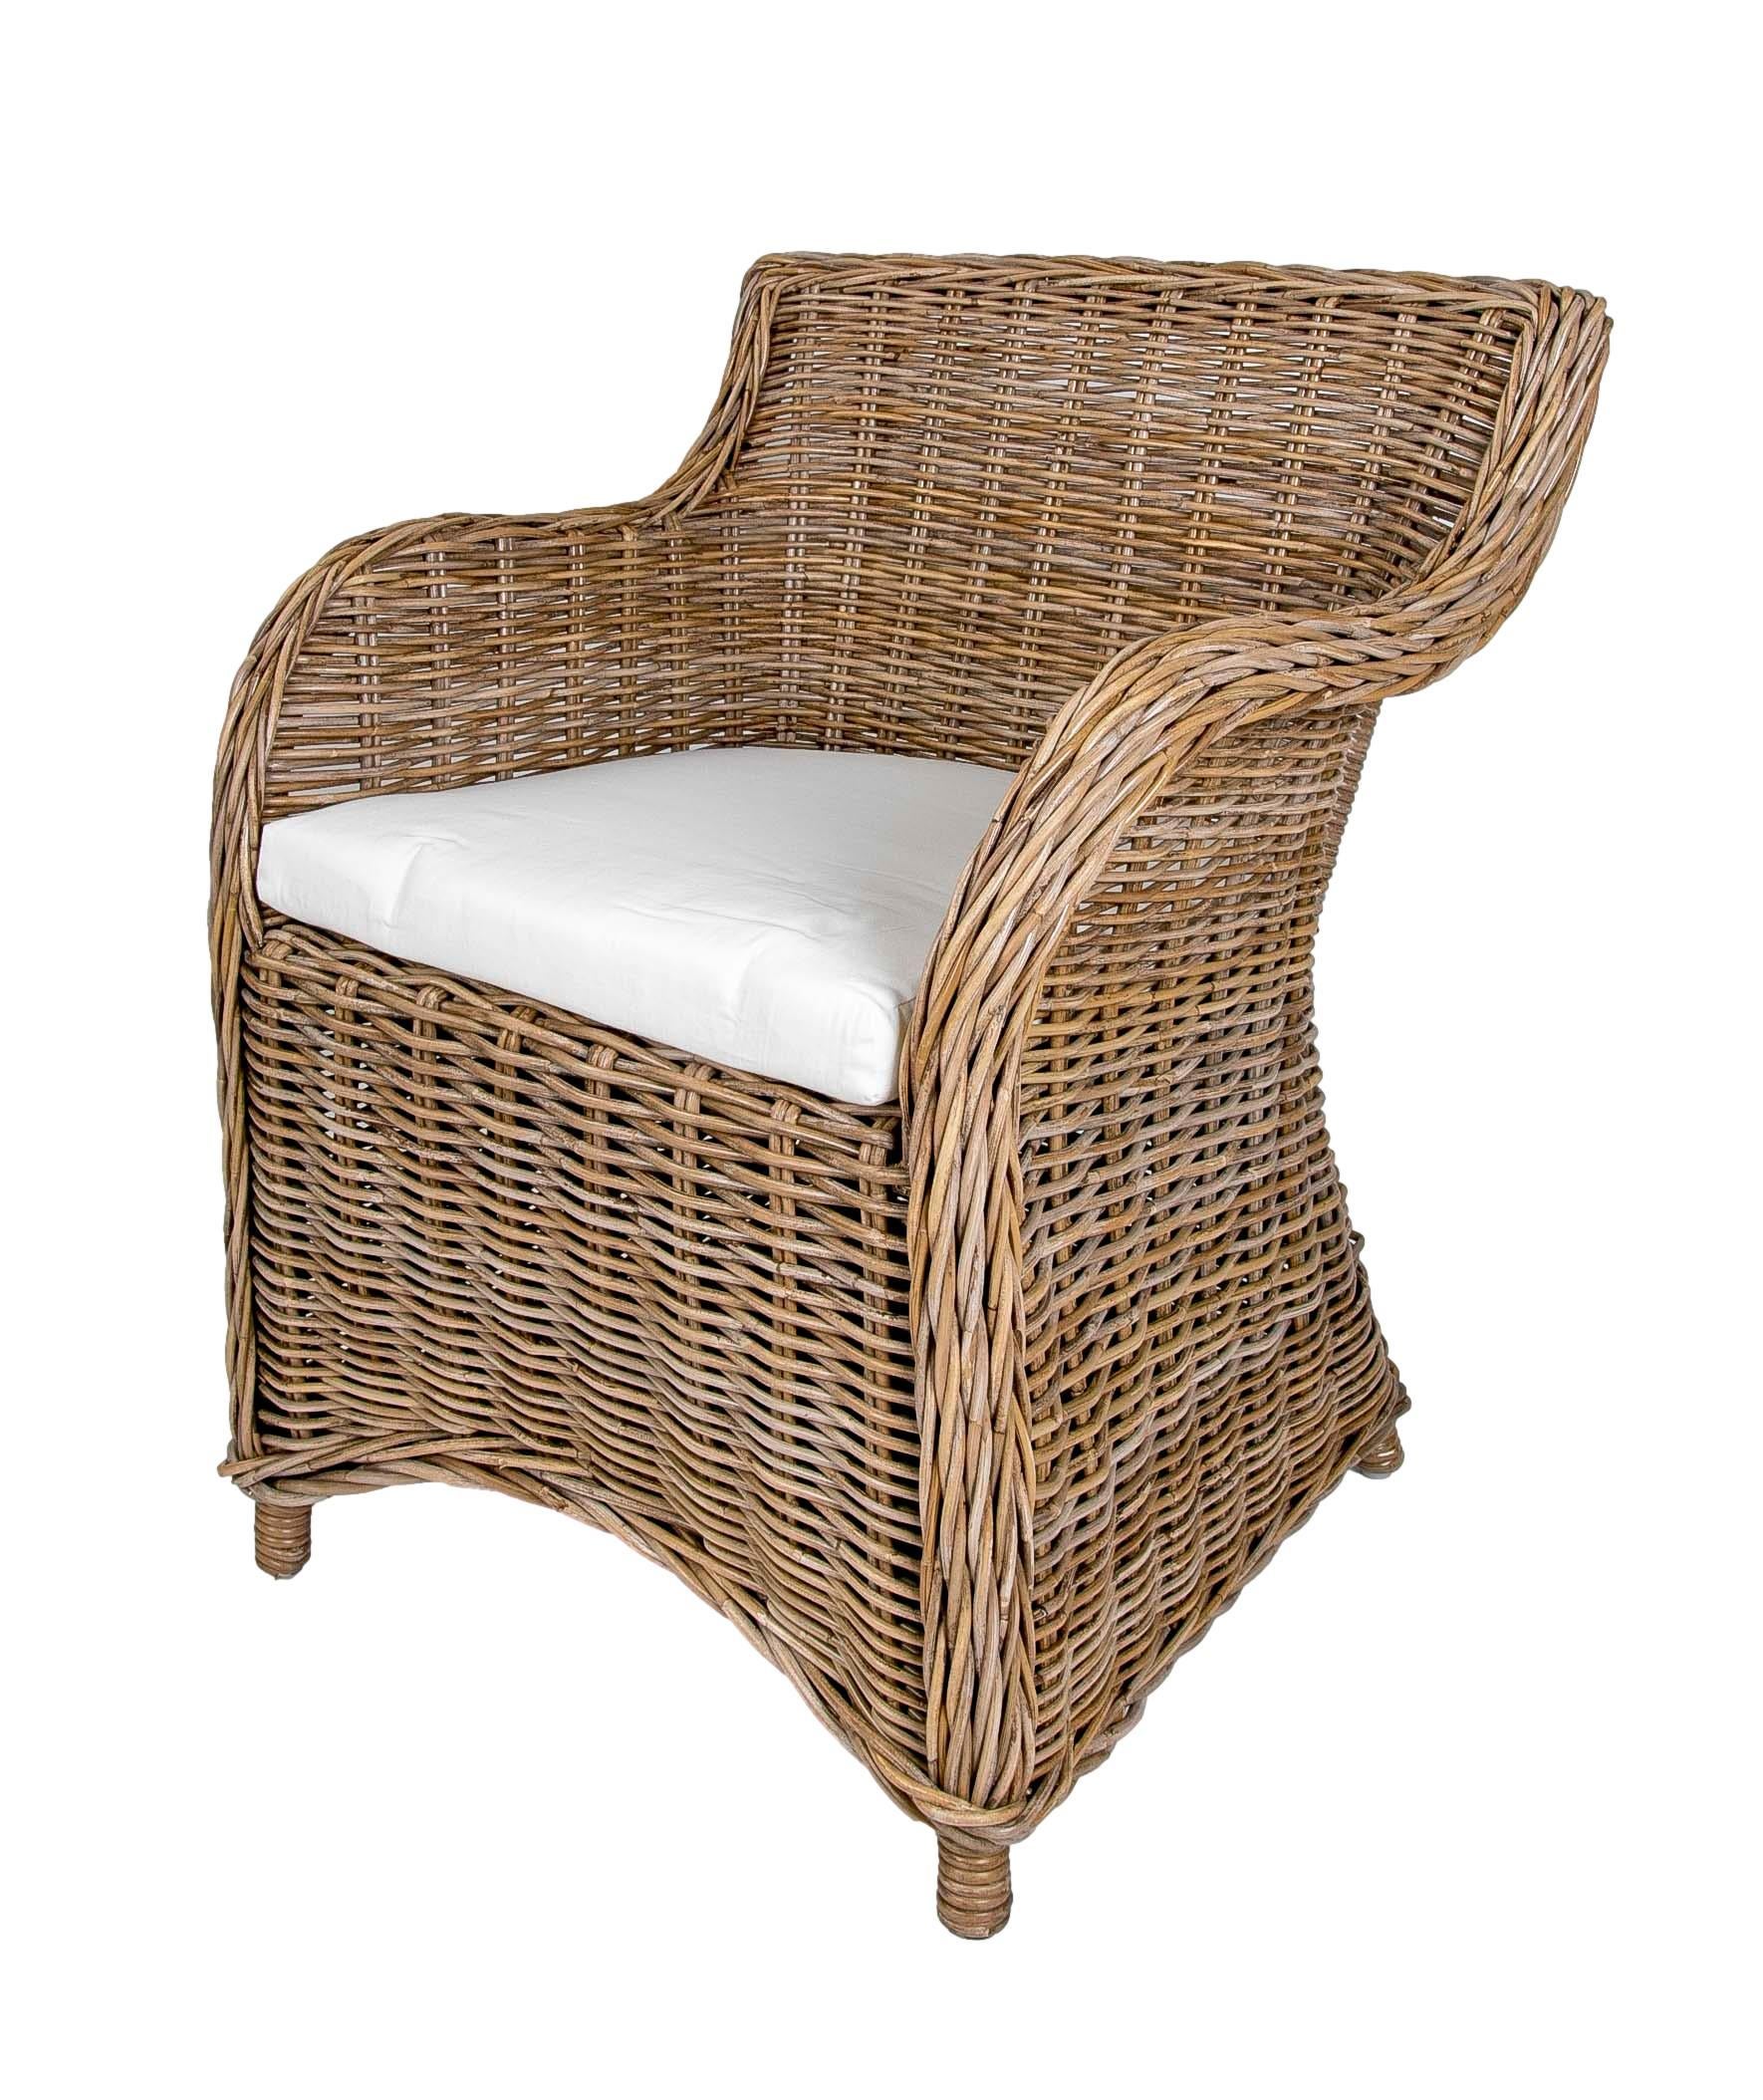  Rattan Garden Chair with Cushion in Greyish Tone For Sale 3